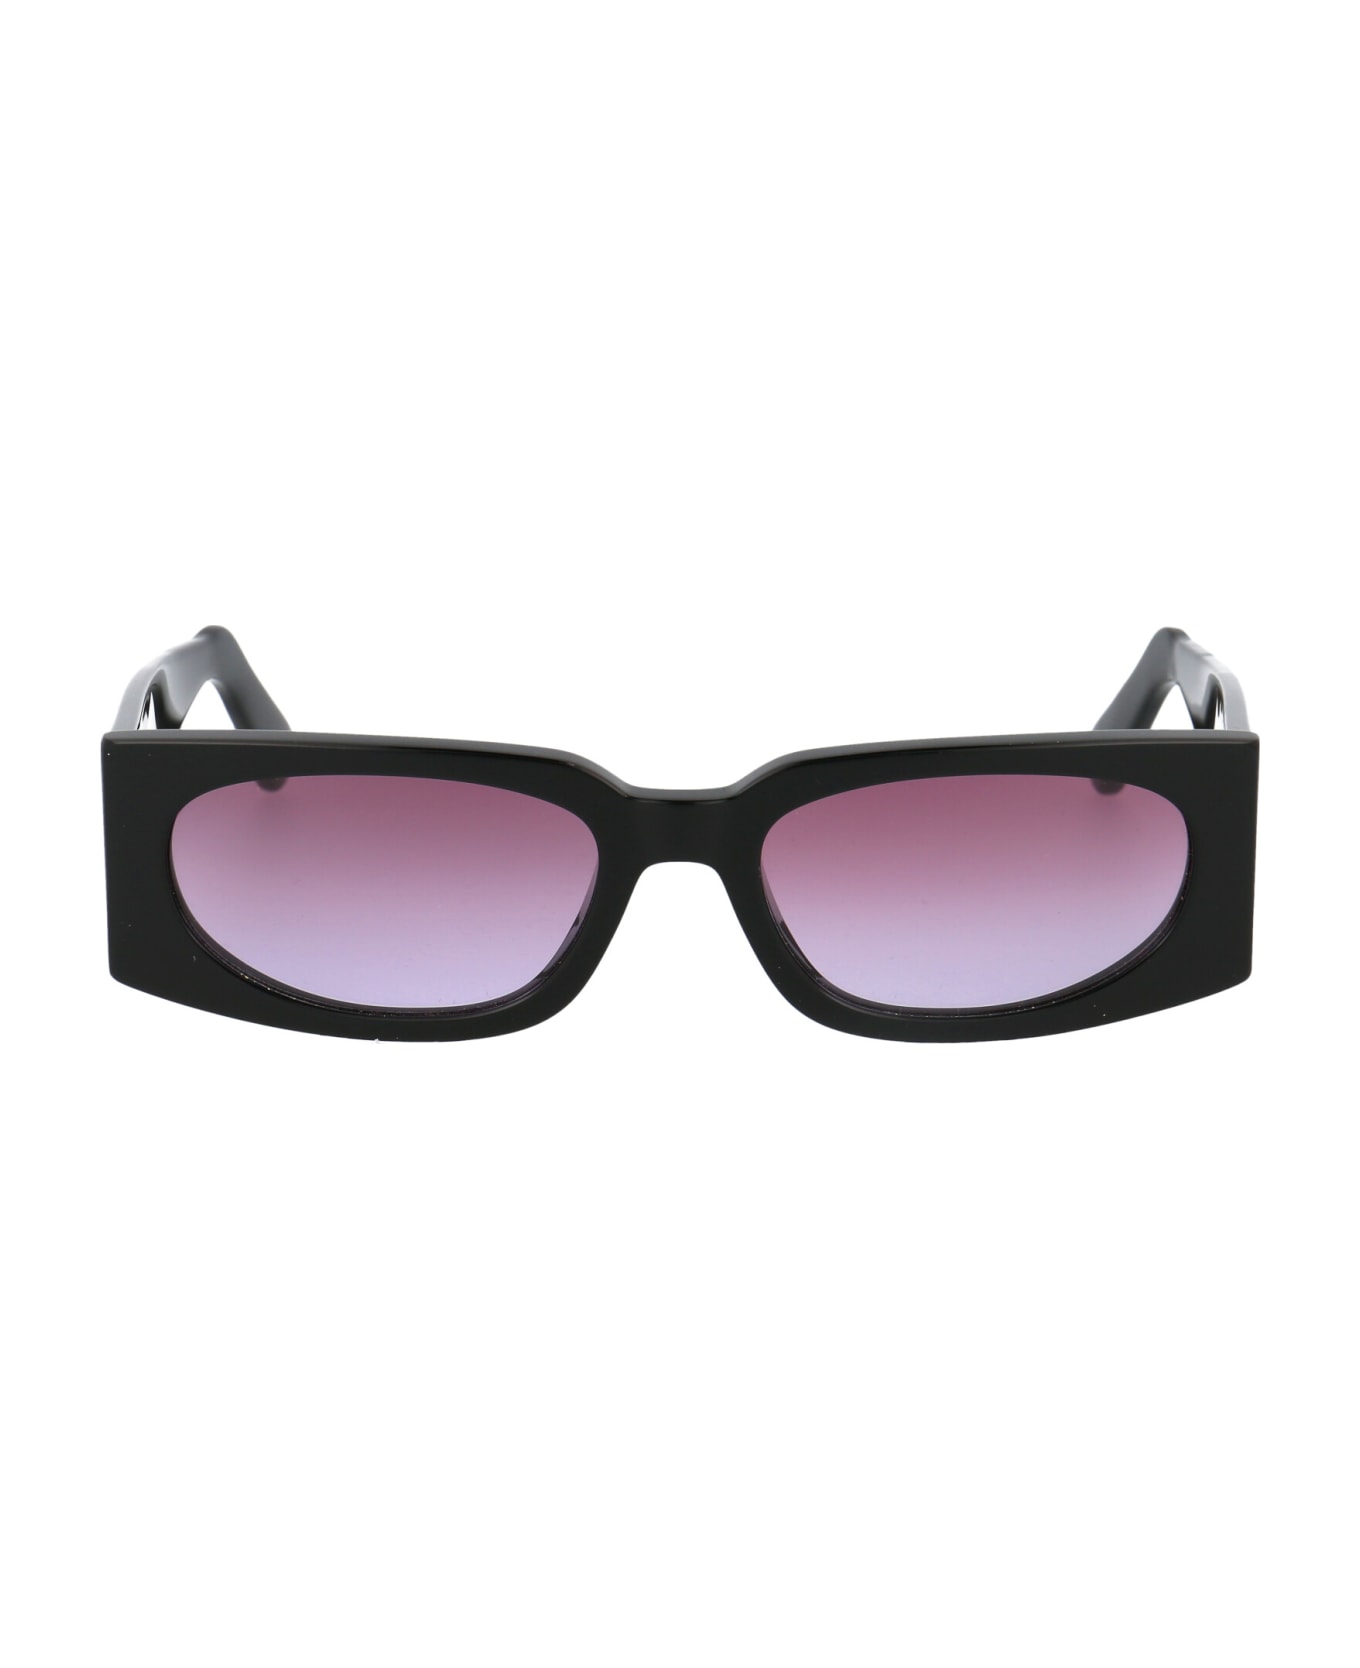 GCDS Gd0016 Sunglasses - 01Z BLACK